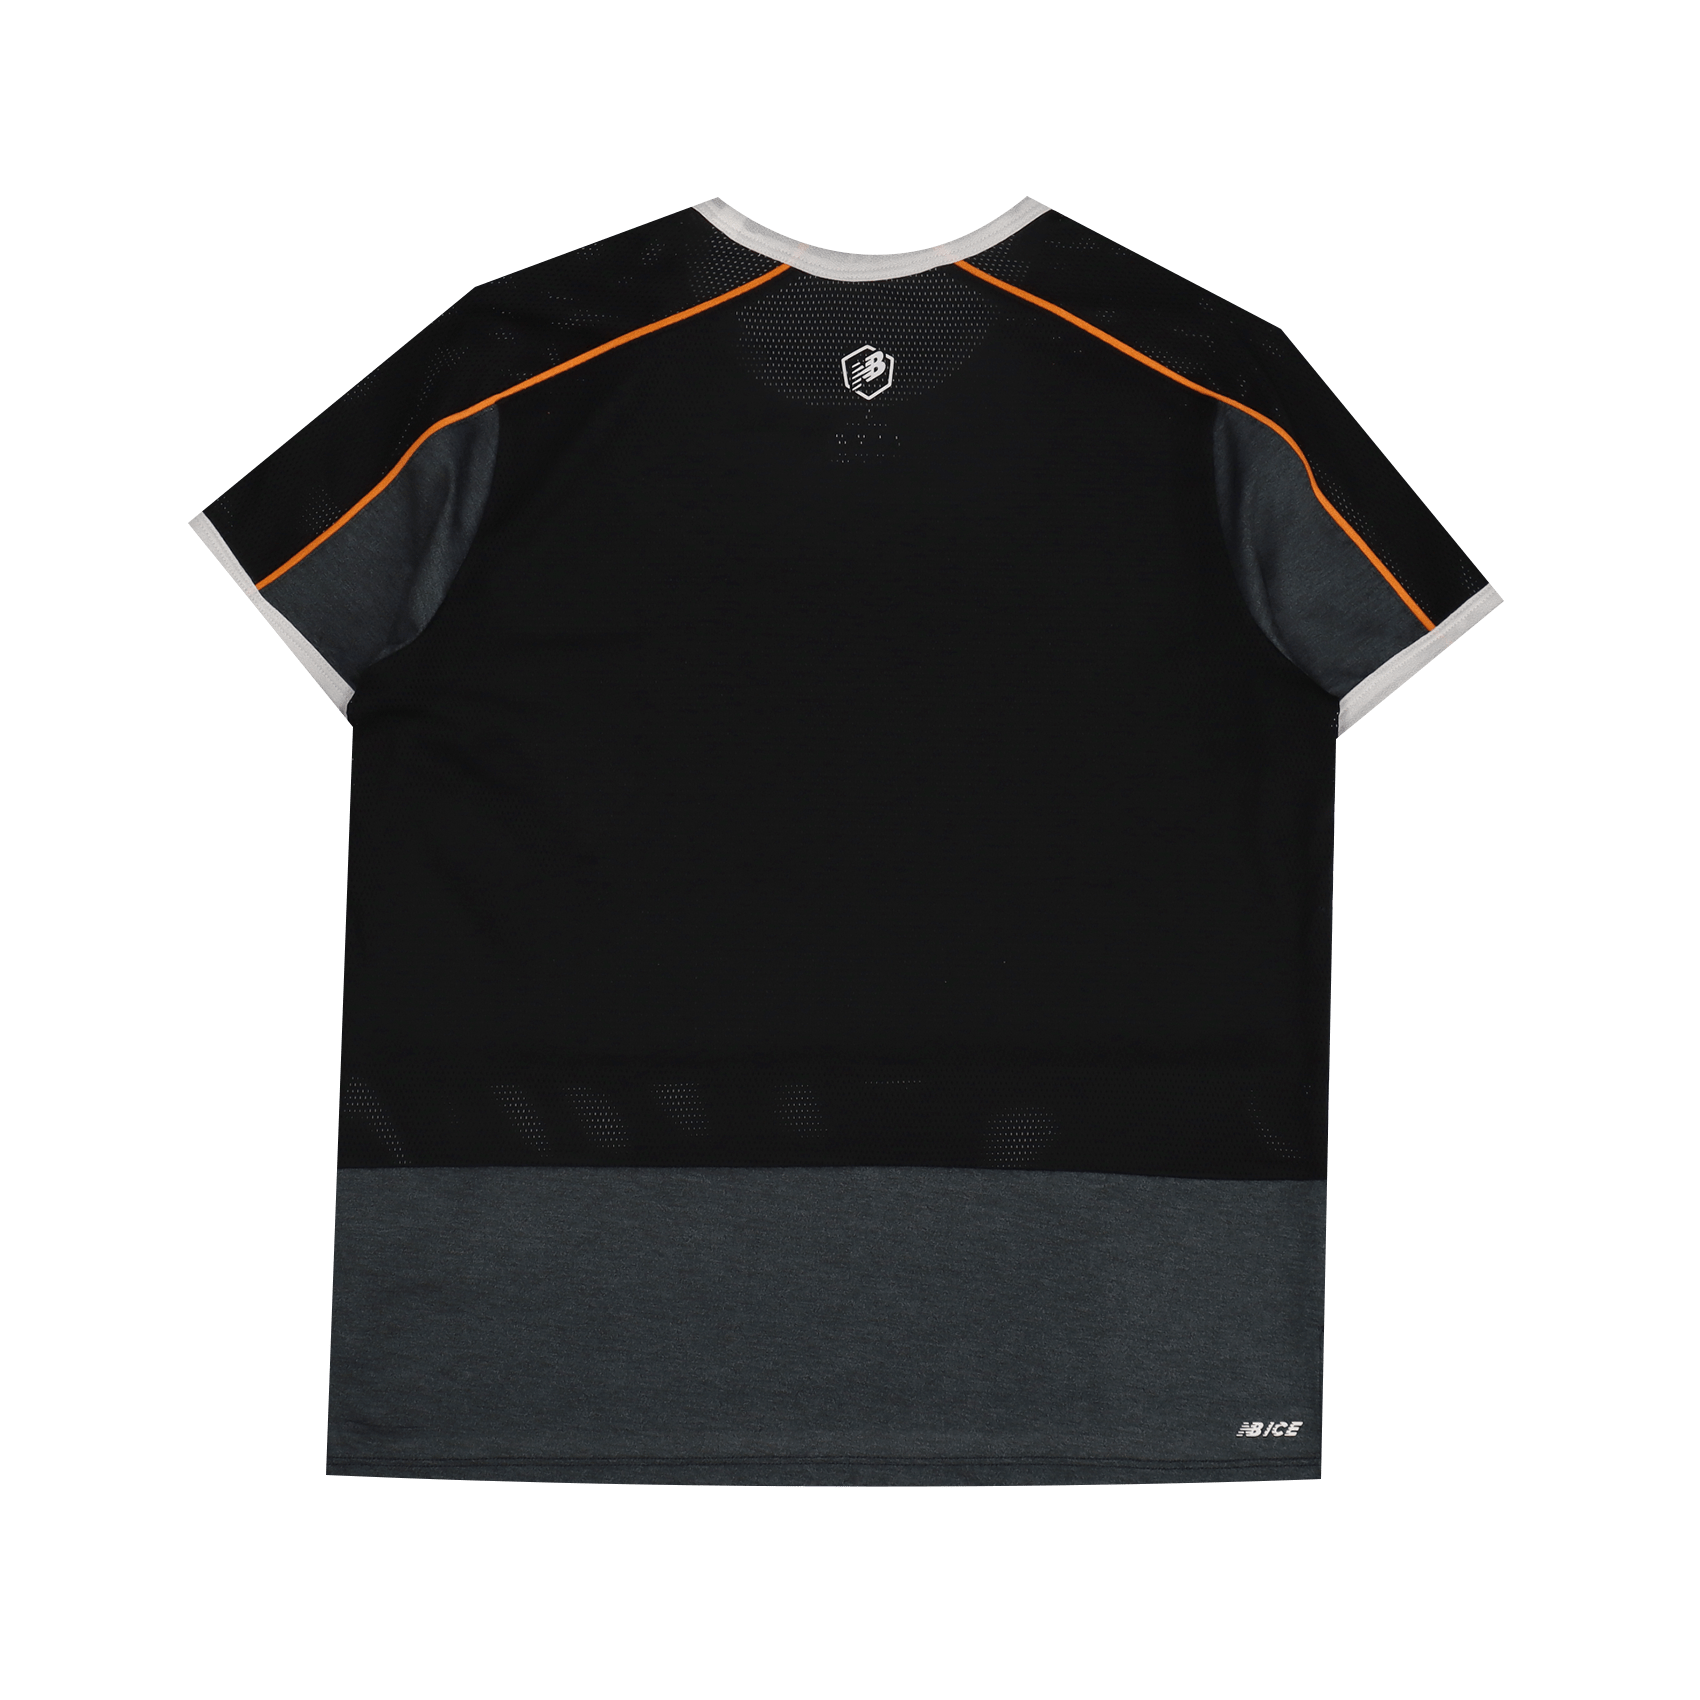 Women's Printed Fast Light T-shirt Short Sleeves - Grey/Black.